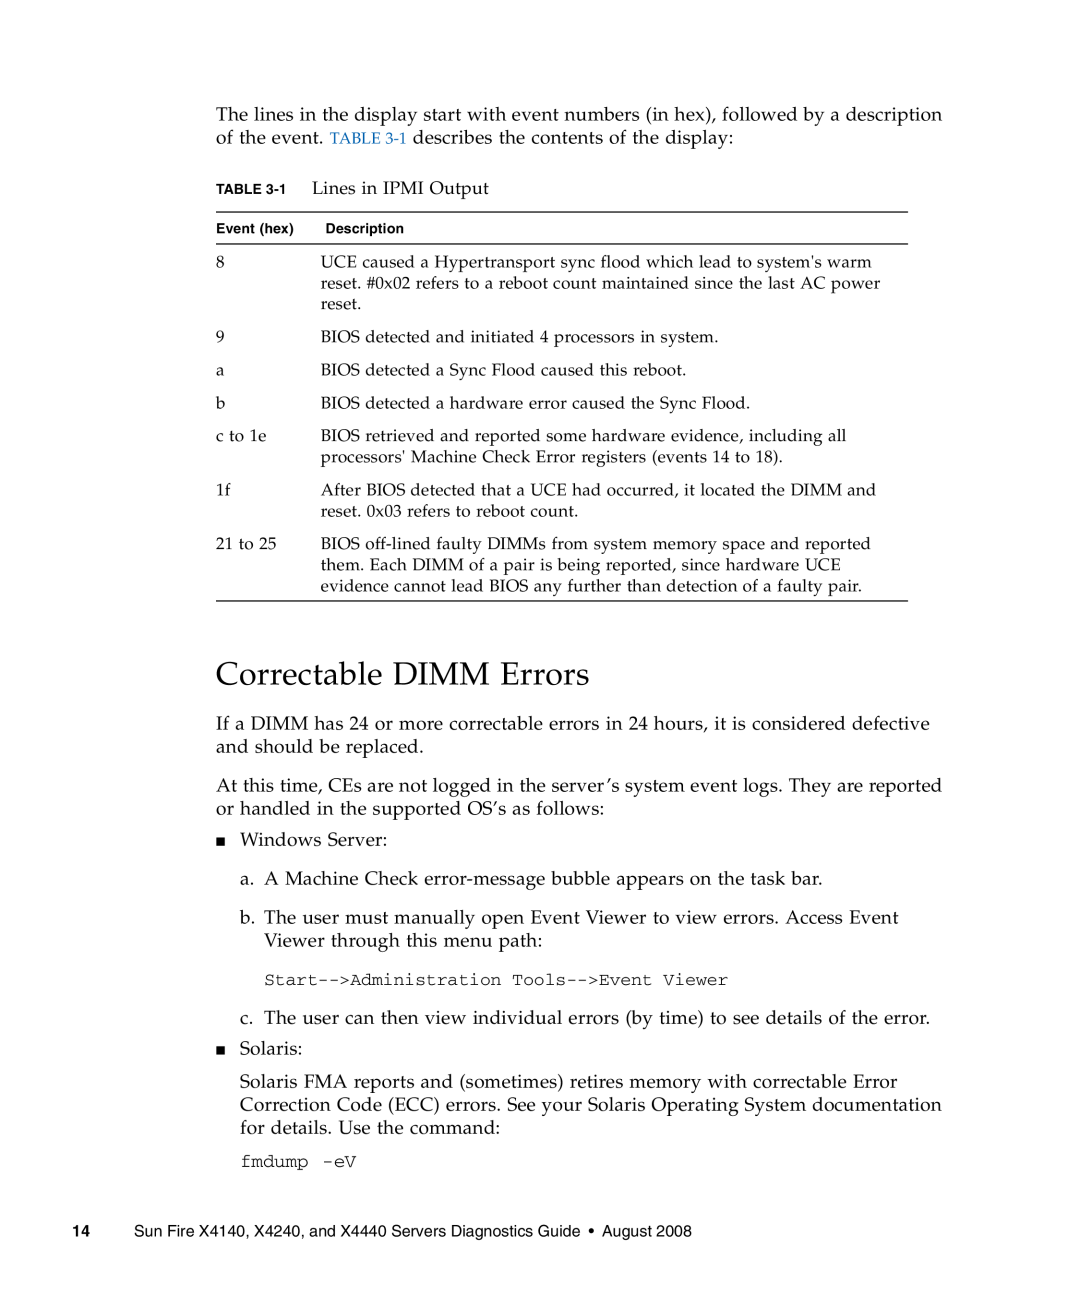 Sun Microsystems X4240, X4440, X4140 manual Correctable DIMM Errors 